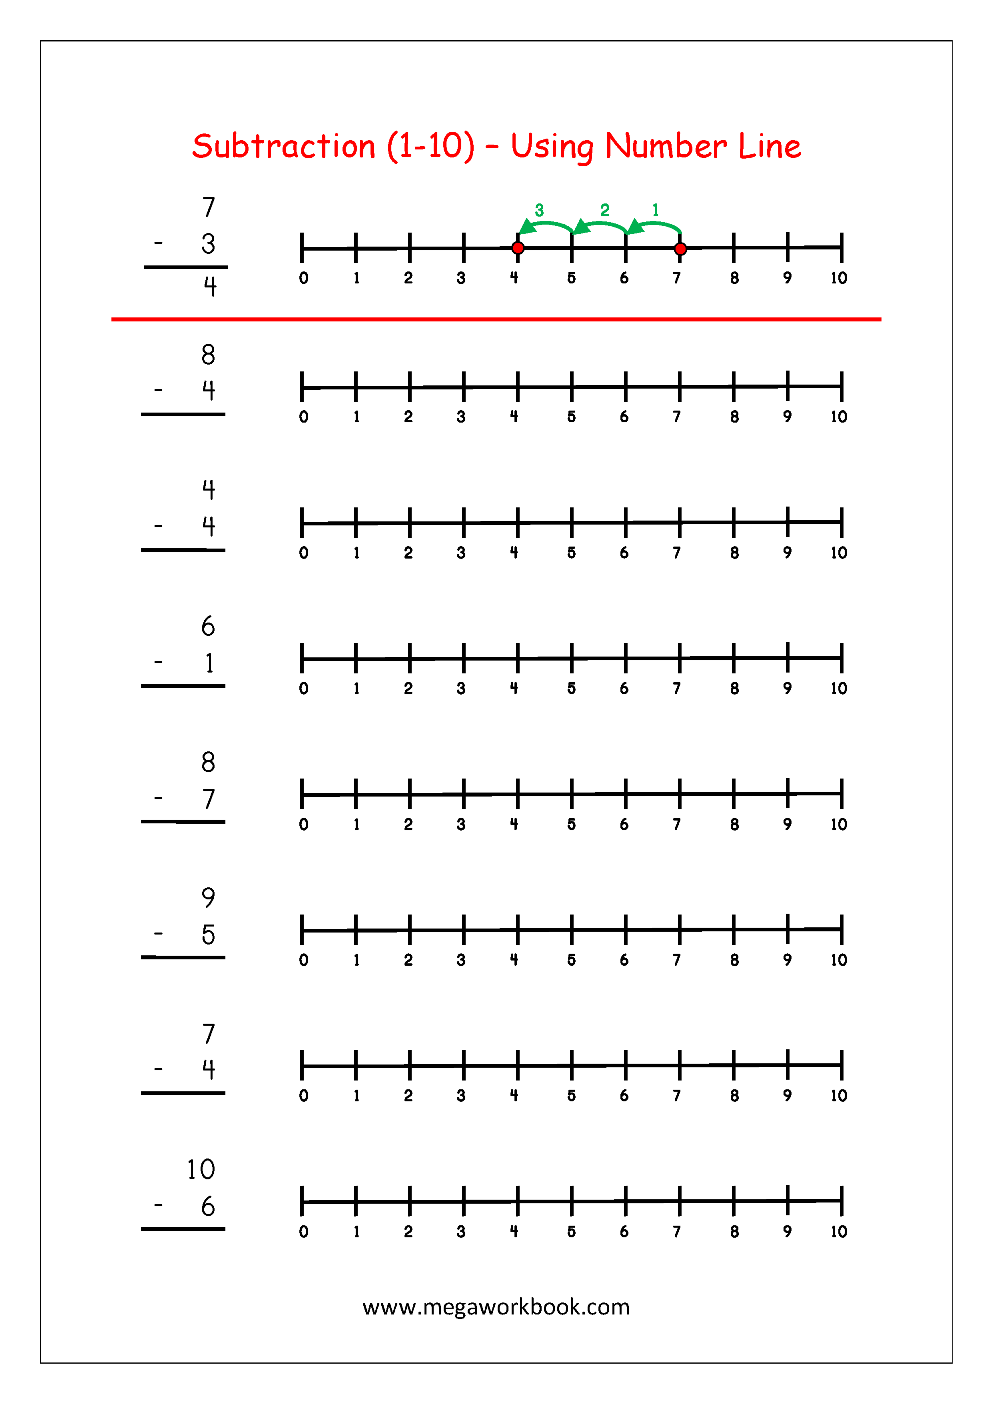 Free Printable Number Subtraction 1 10 Worksheets For Grade 1 And Kindergarten Subtraction